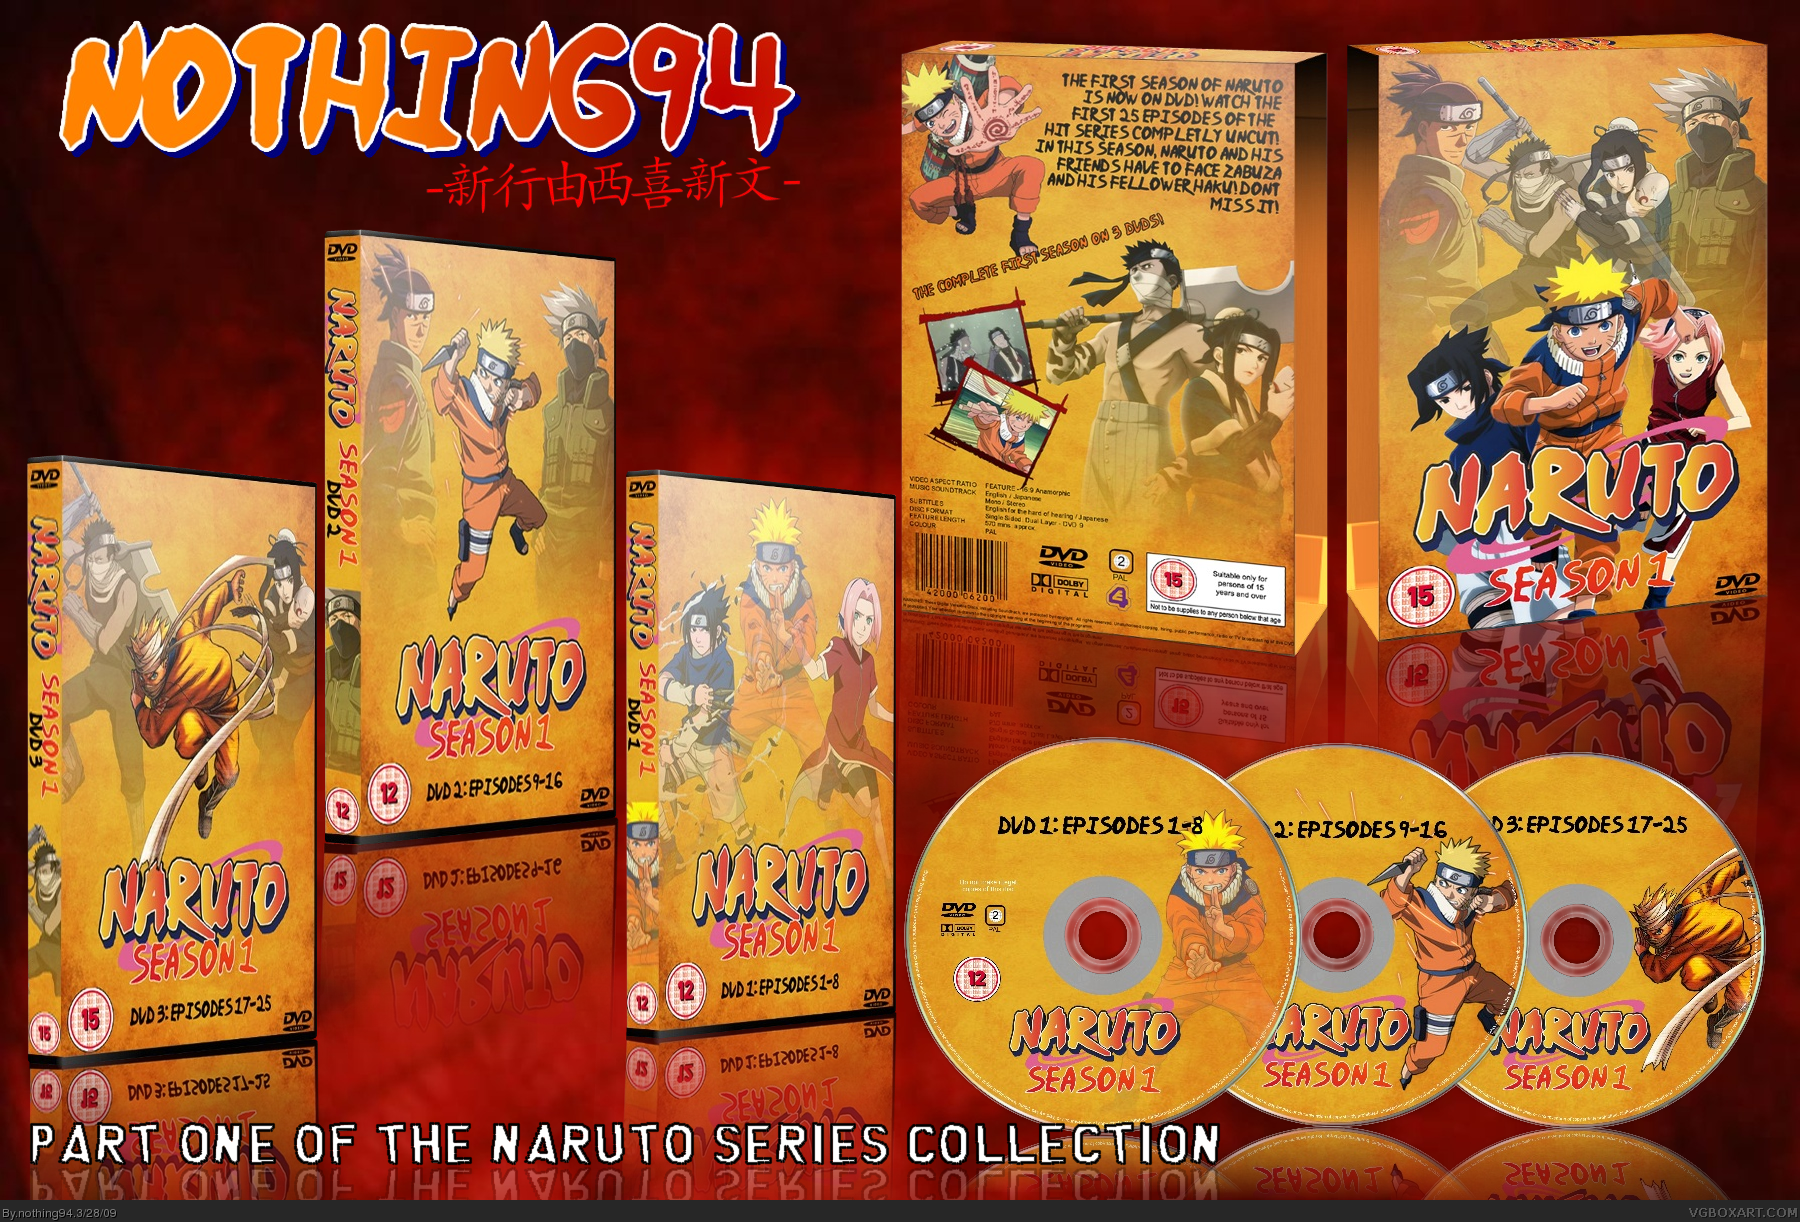 Naruto Season 1 box cover